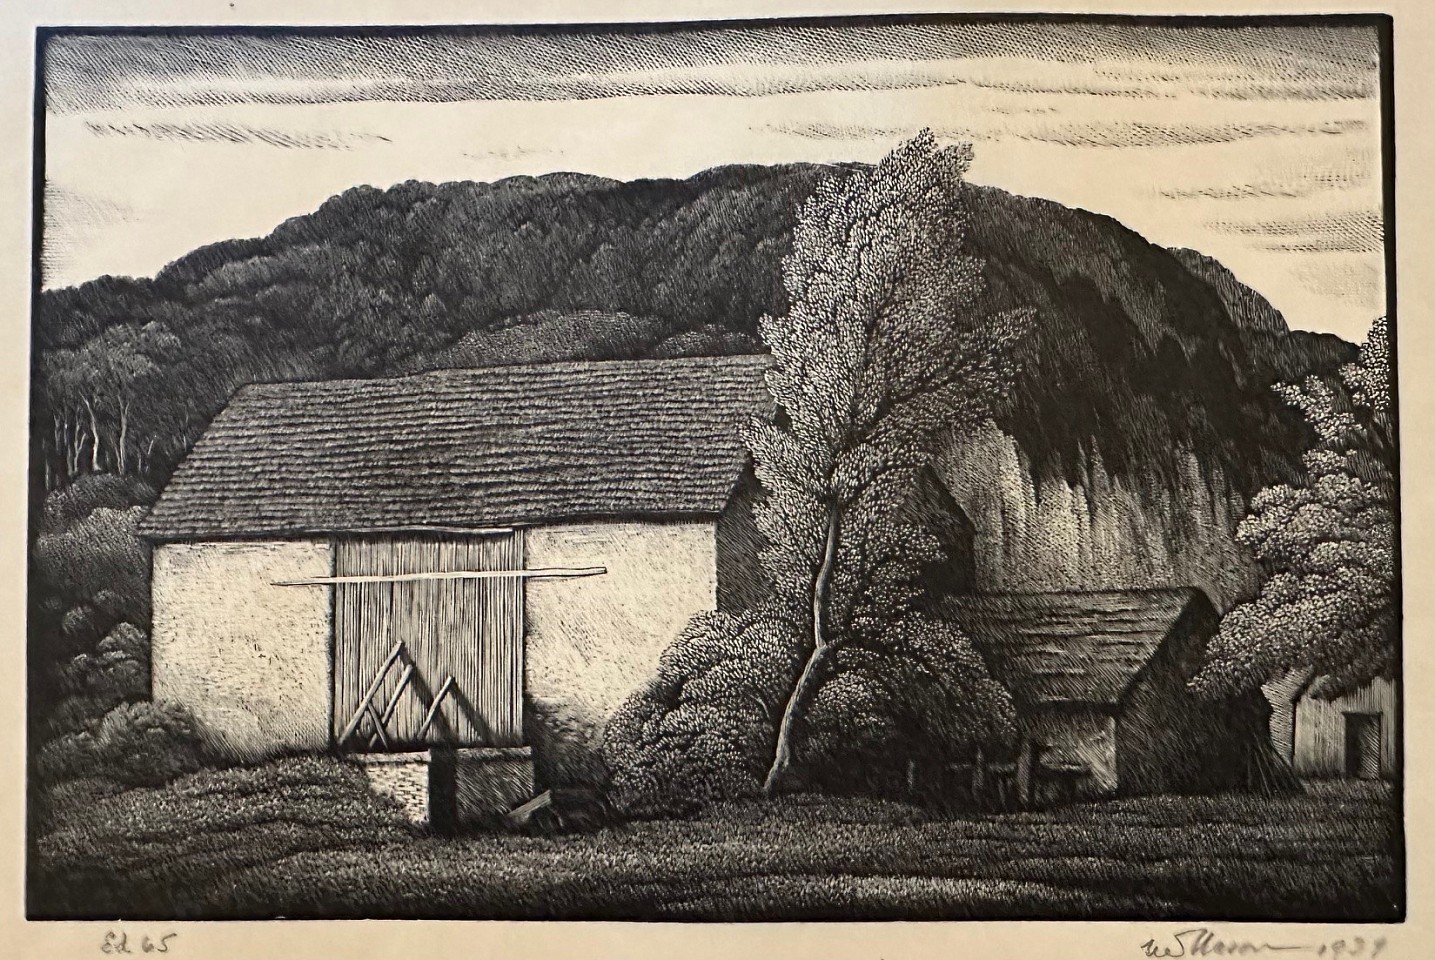 Thomas Willoughby Nason, Stone Barn, Bucks County, 1939
wood engraving, 4 1/4"" x 6 3/8""
JCA 6777.01
$850